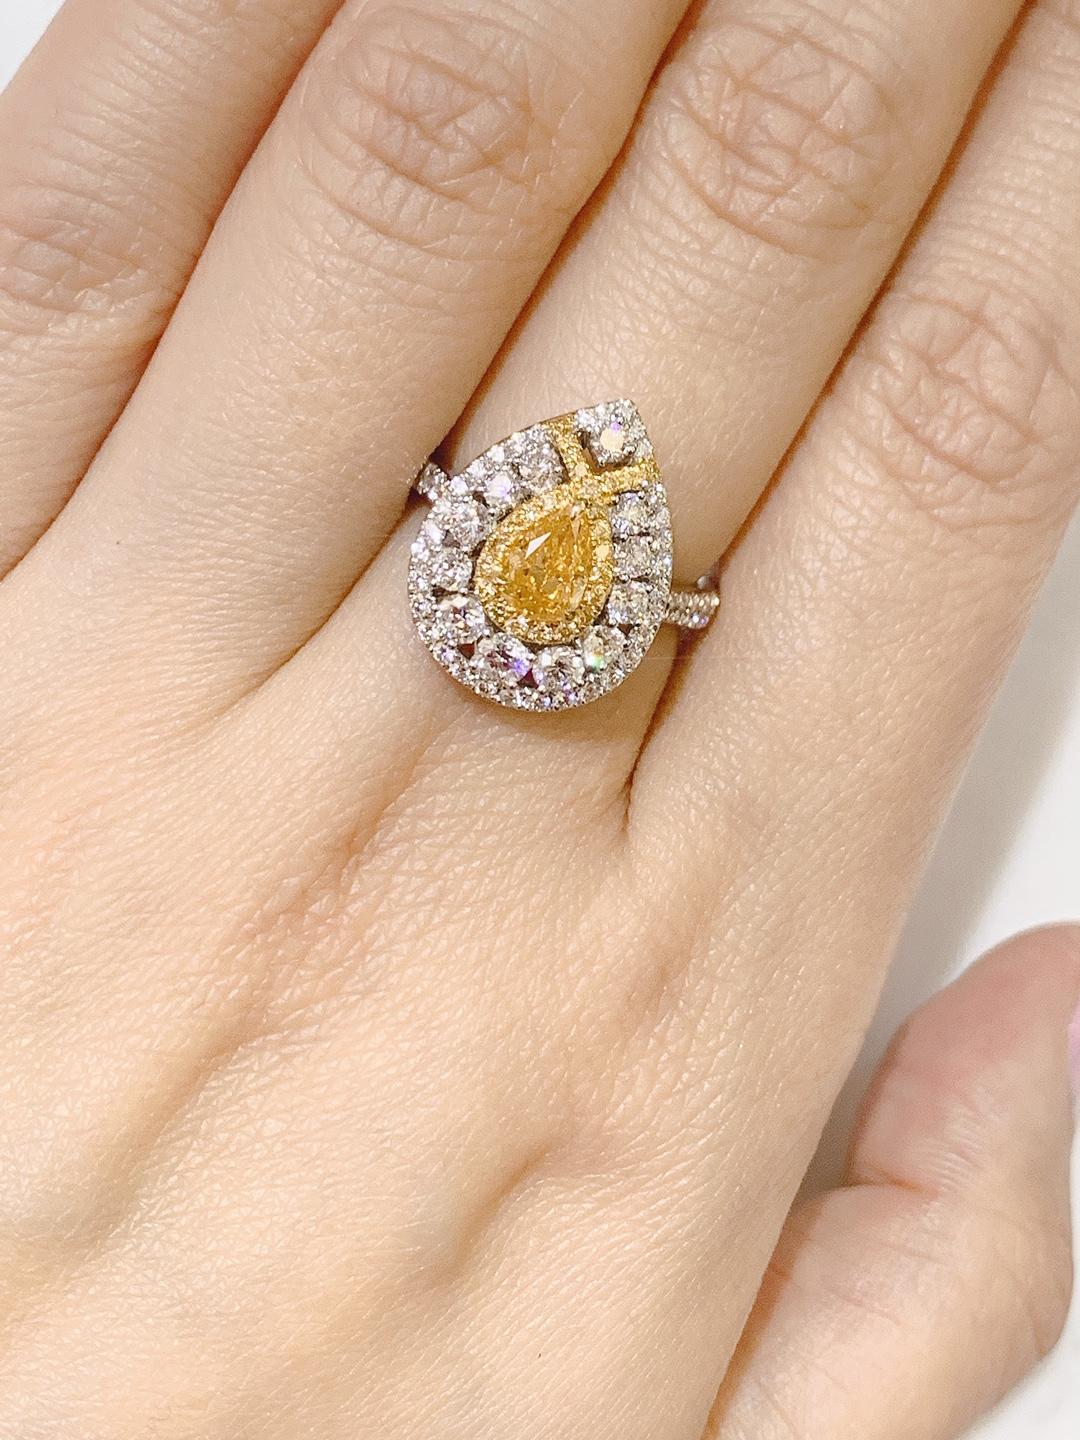 GIA Certified 0.52 Carat Fancy Intense Yellow- Orange Diamond Ring For Sale 1